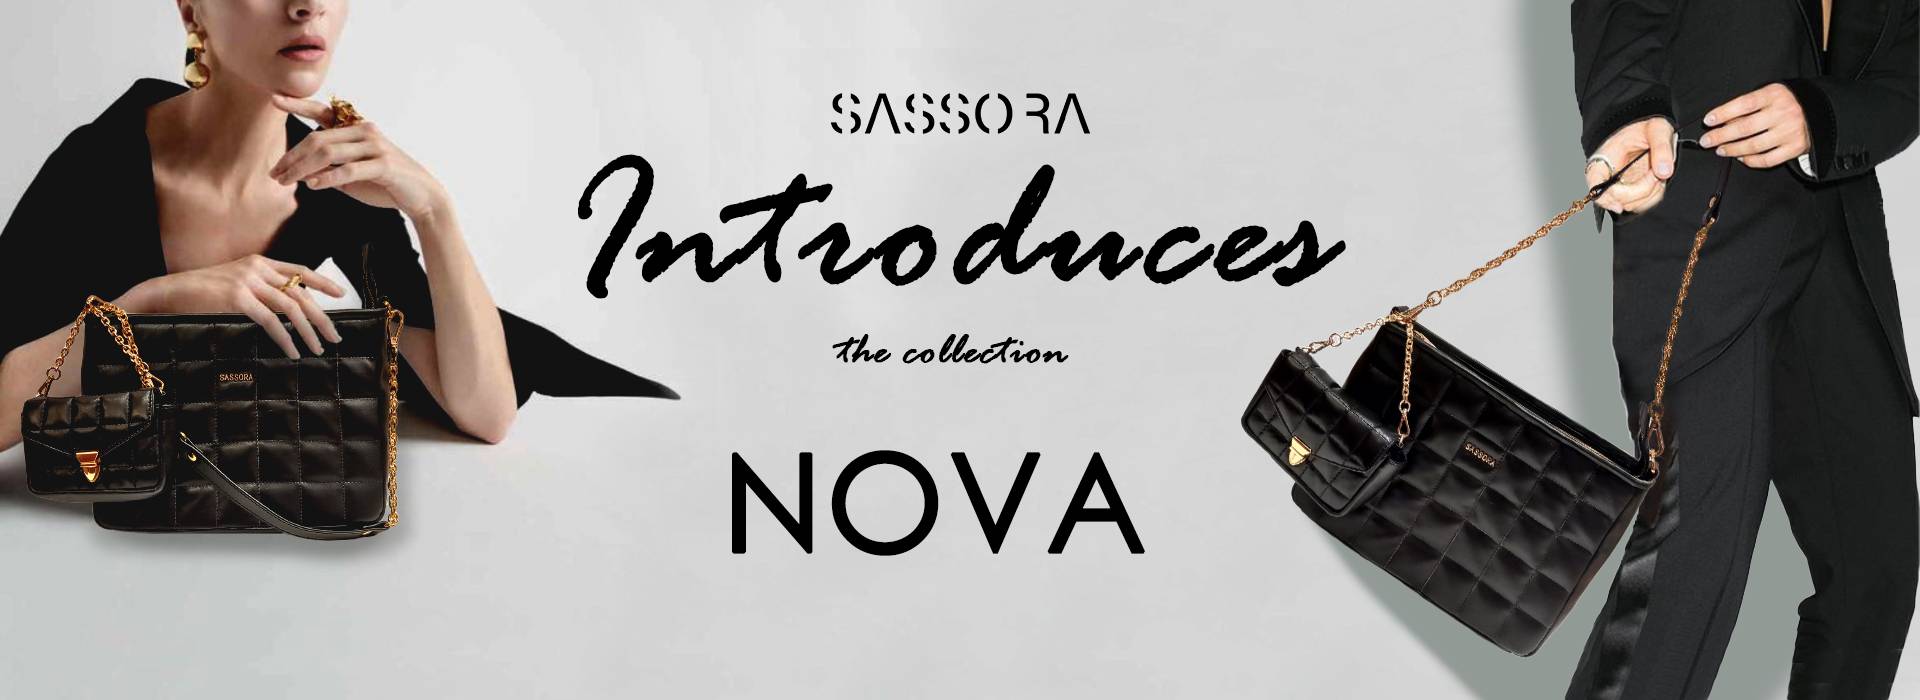 Nova collection by brand Sassora